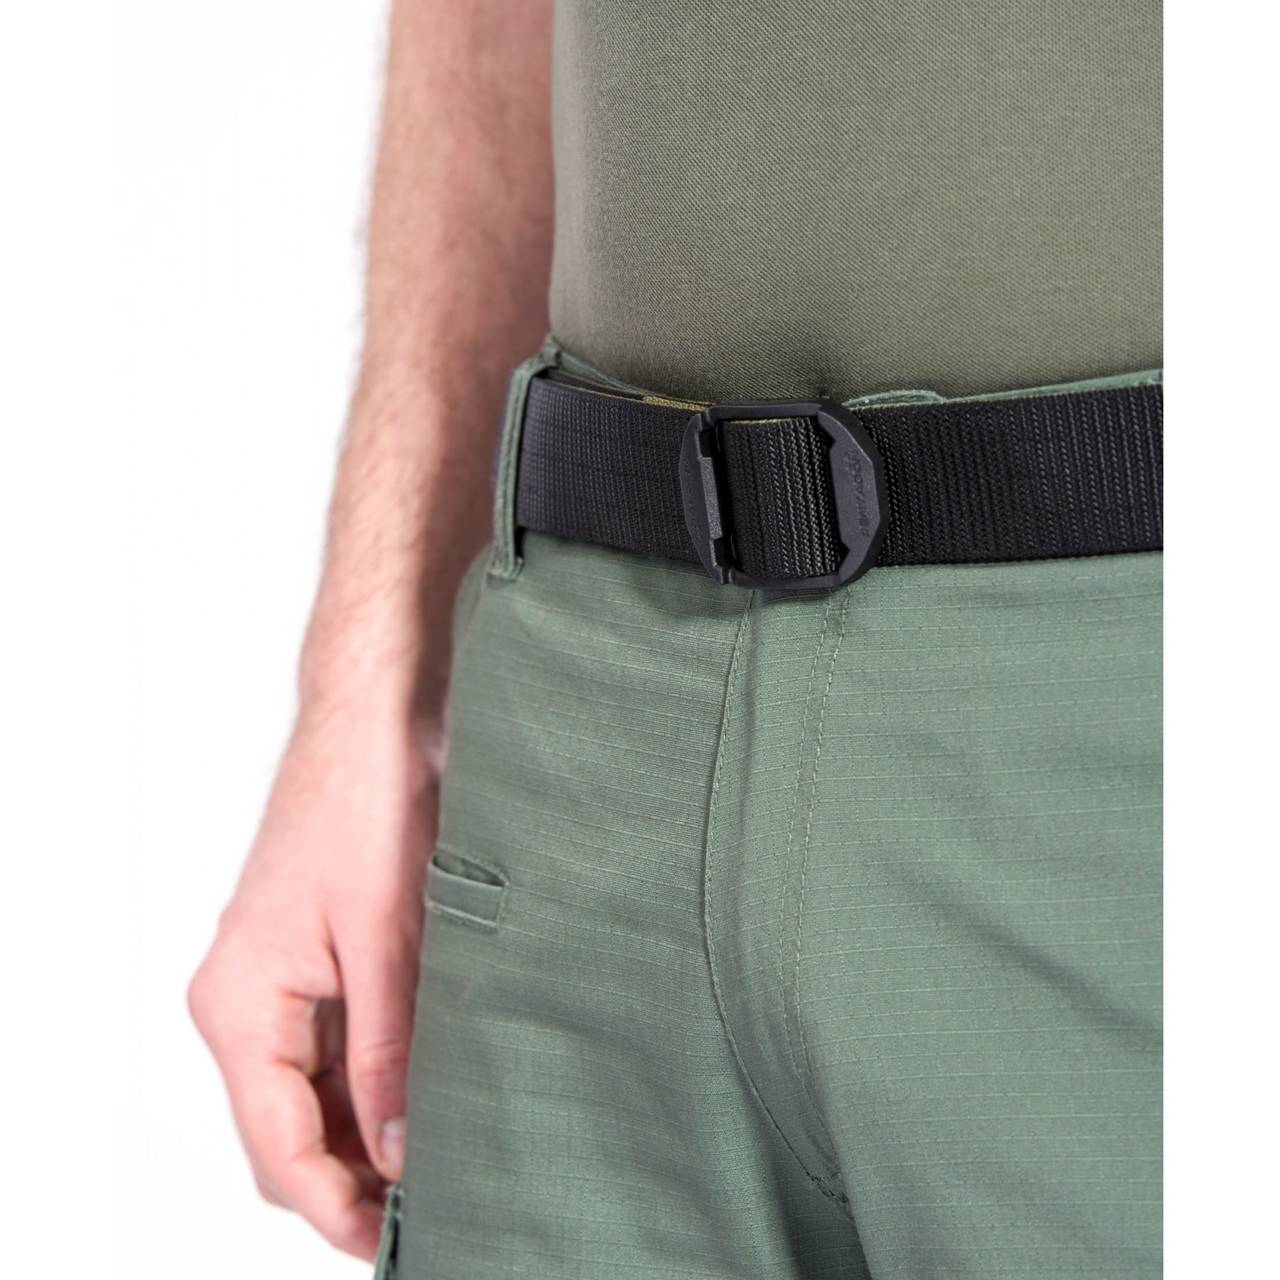 CONDOR OUTDOOR RIGGER trouser belt descender COYOTE  MILITARY RANGE